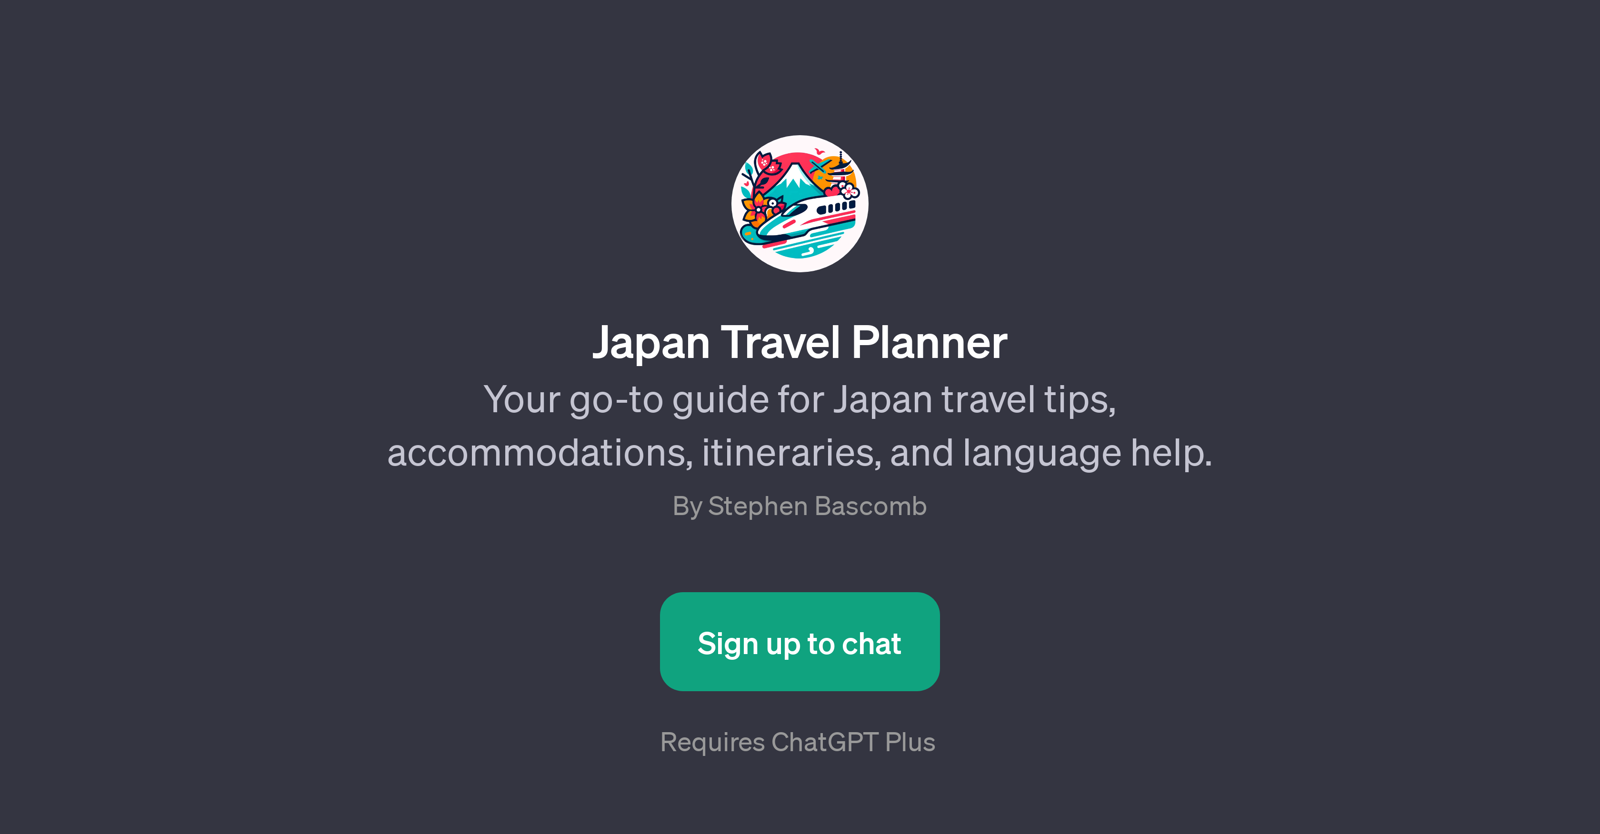 Japan Travel Planner website